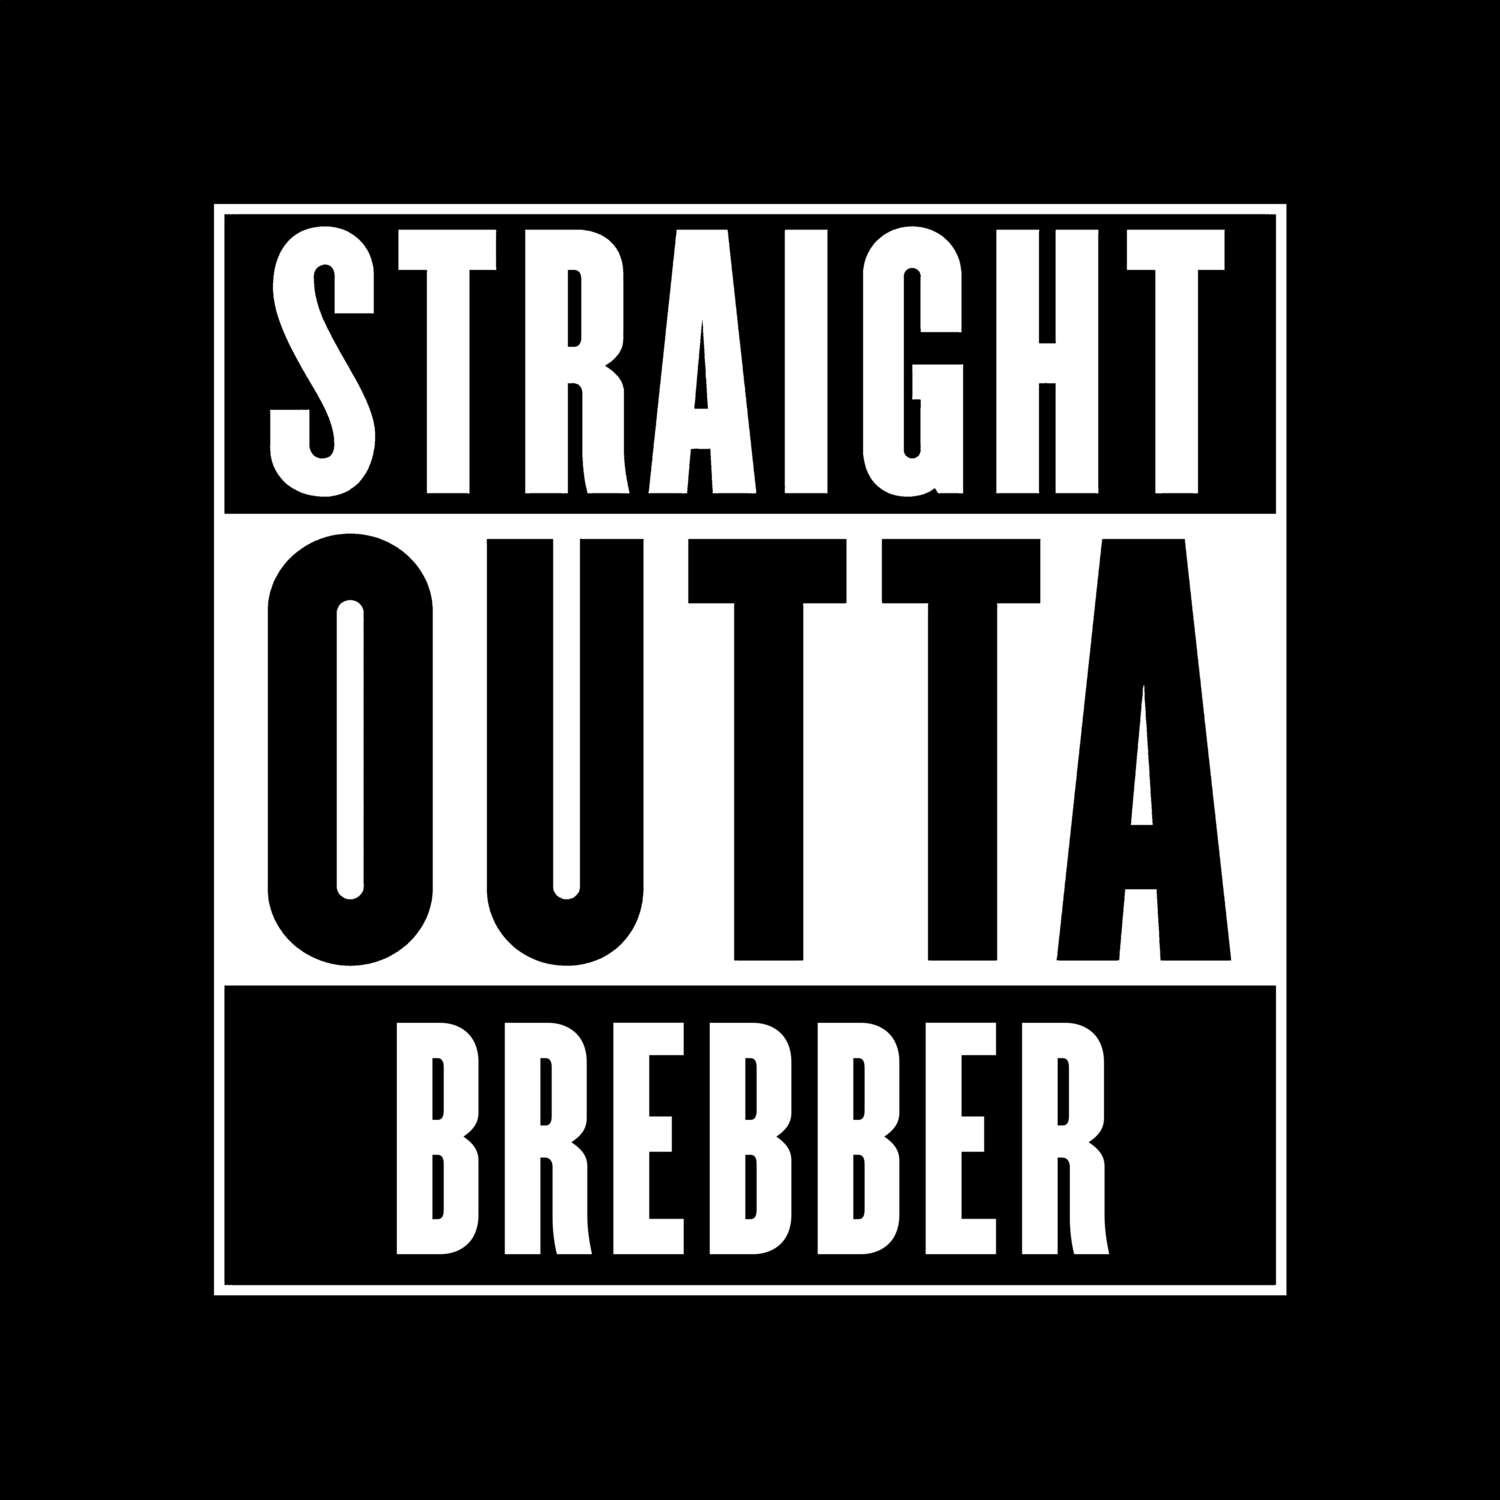 Brebber T-Shirt »Straight Outta«